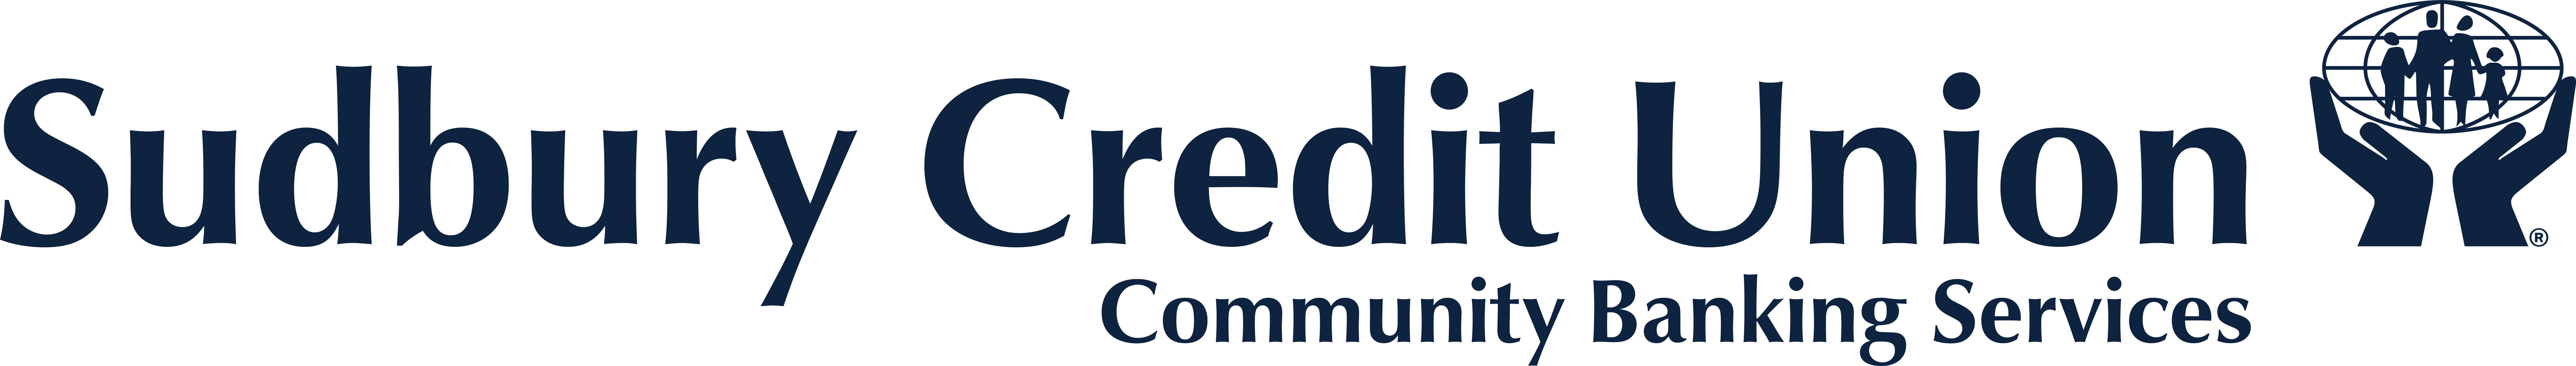 sudbury credit union logo